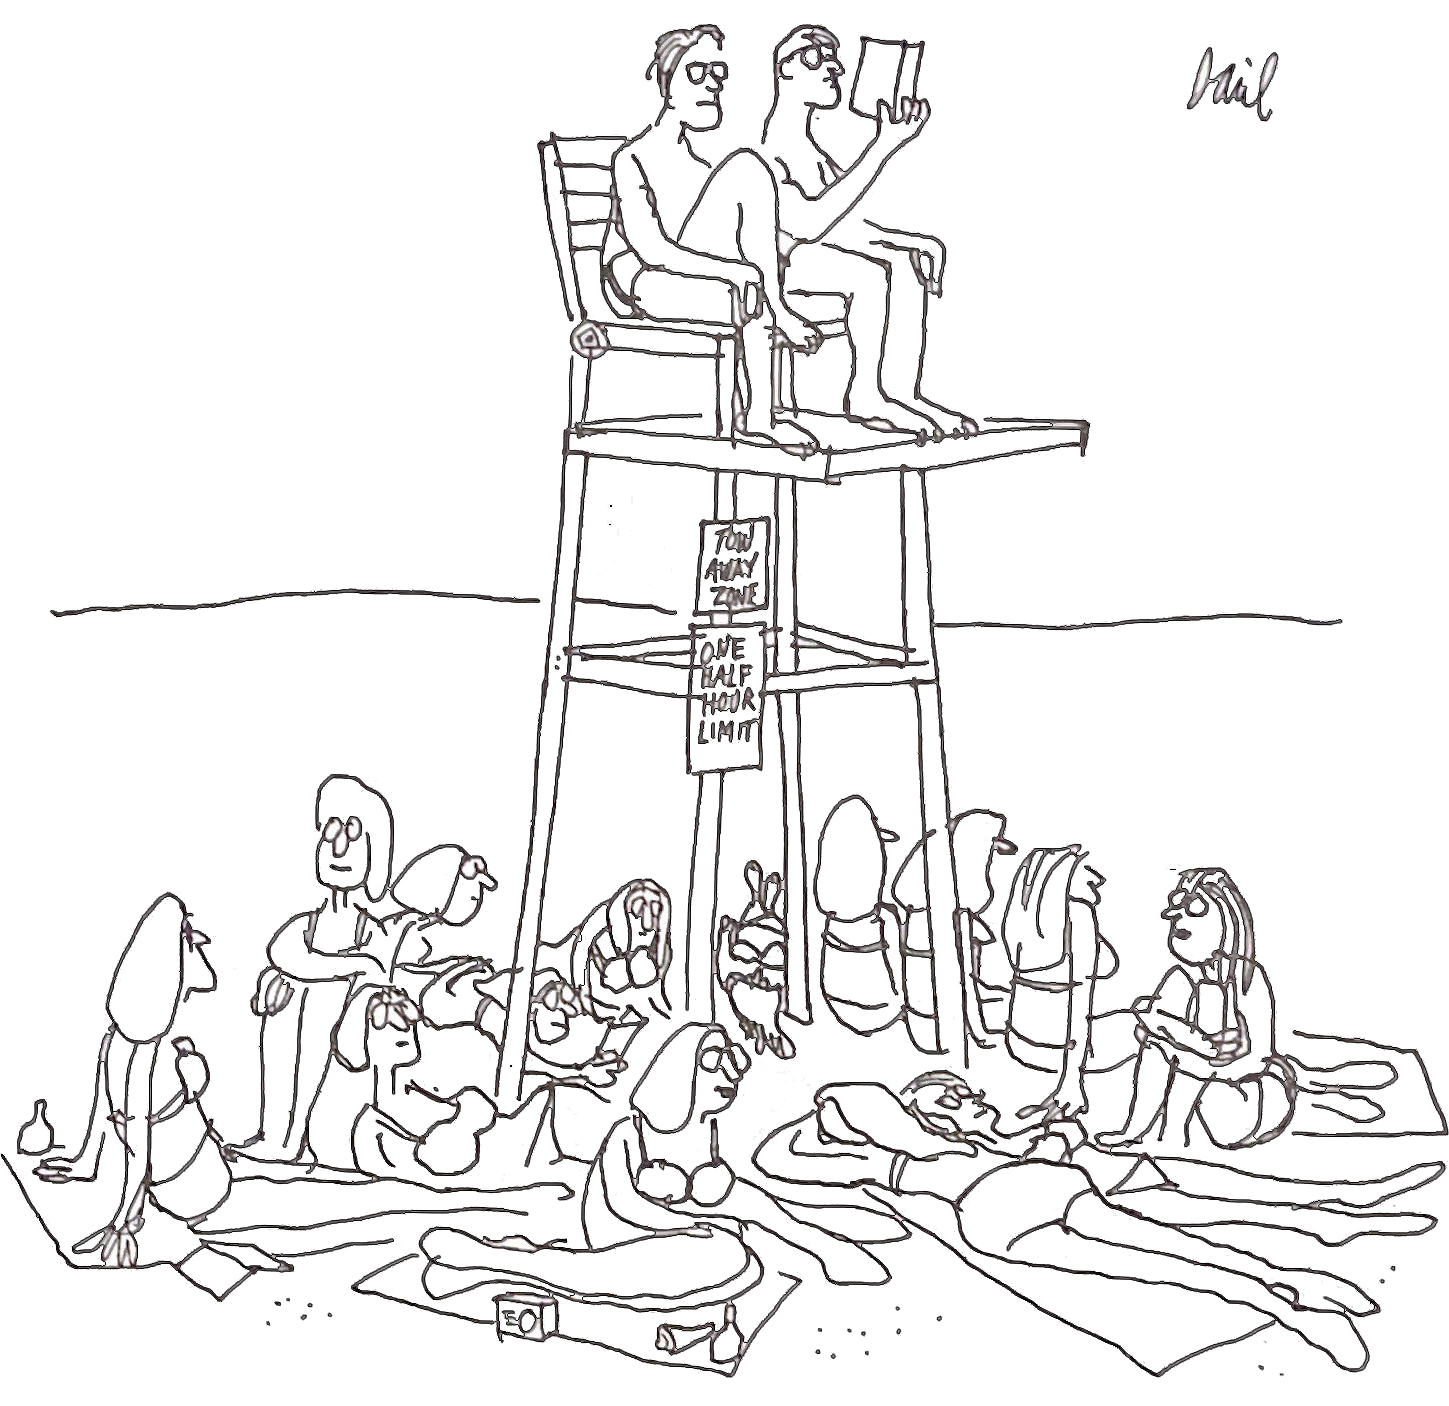 Hamptons beach stickers lifeguard chair cartoon by Dan Rattiner